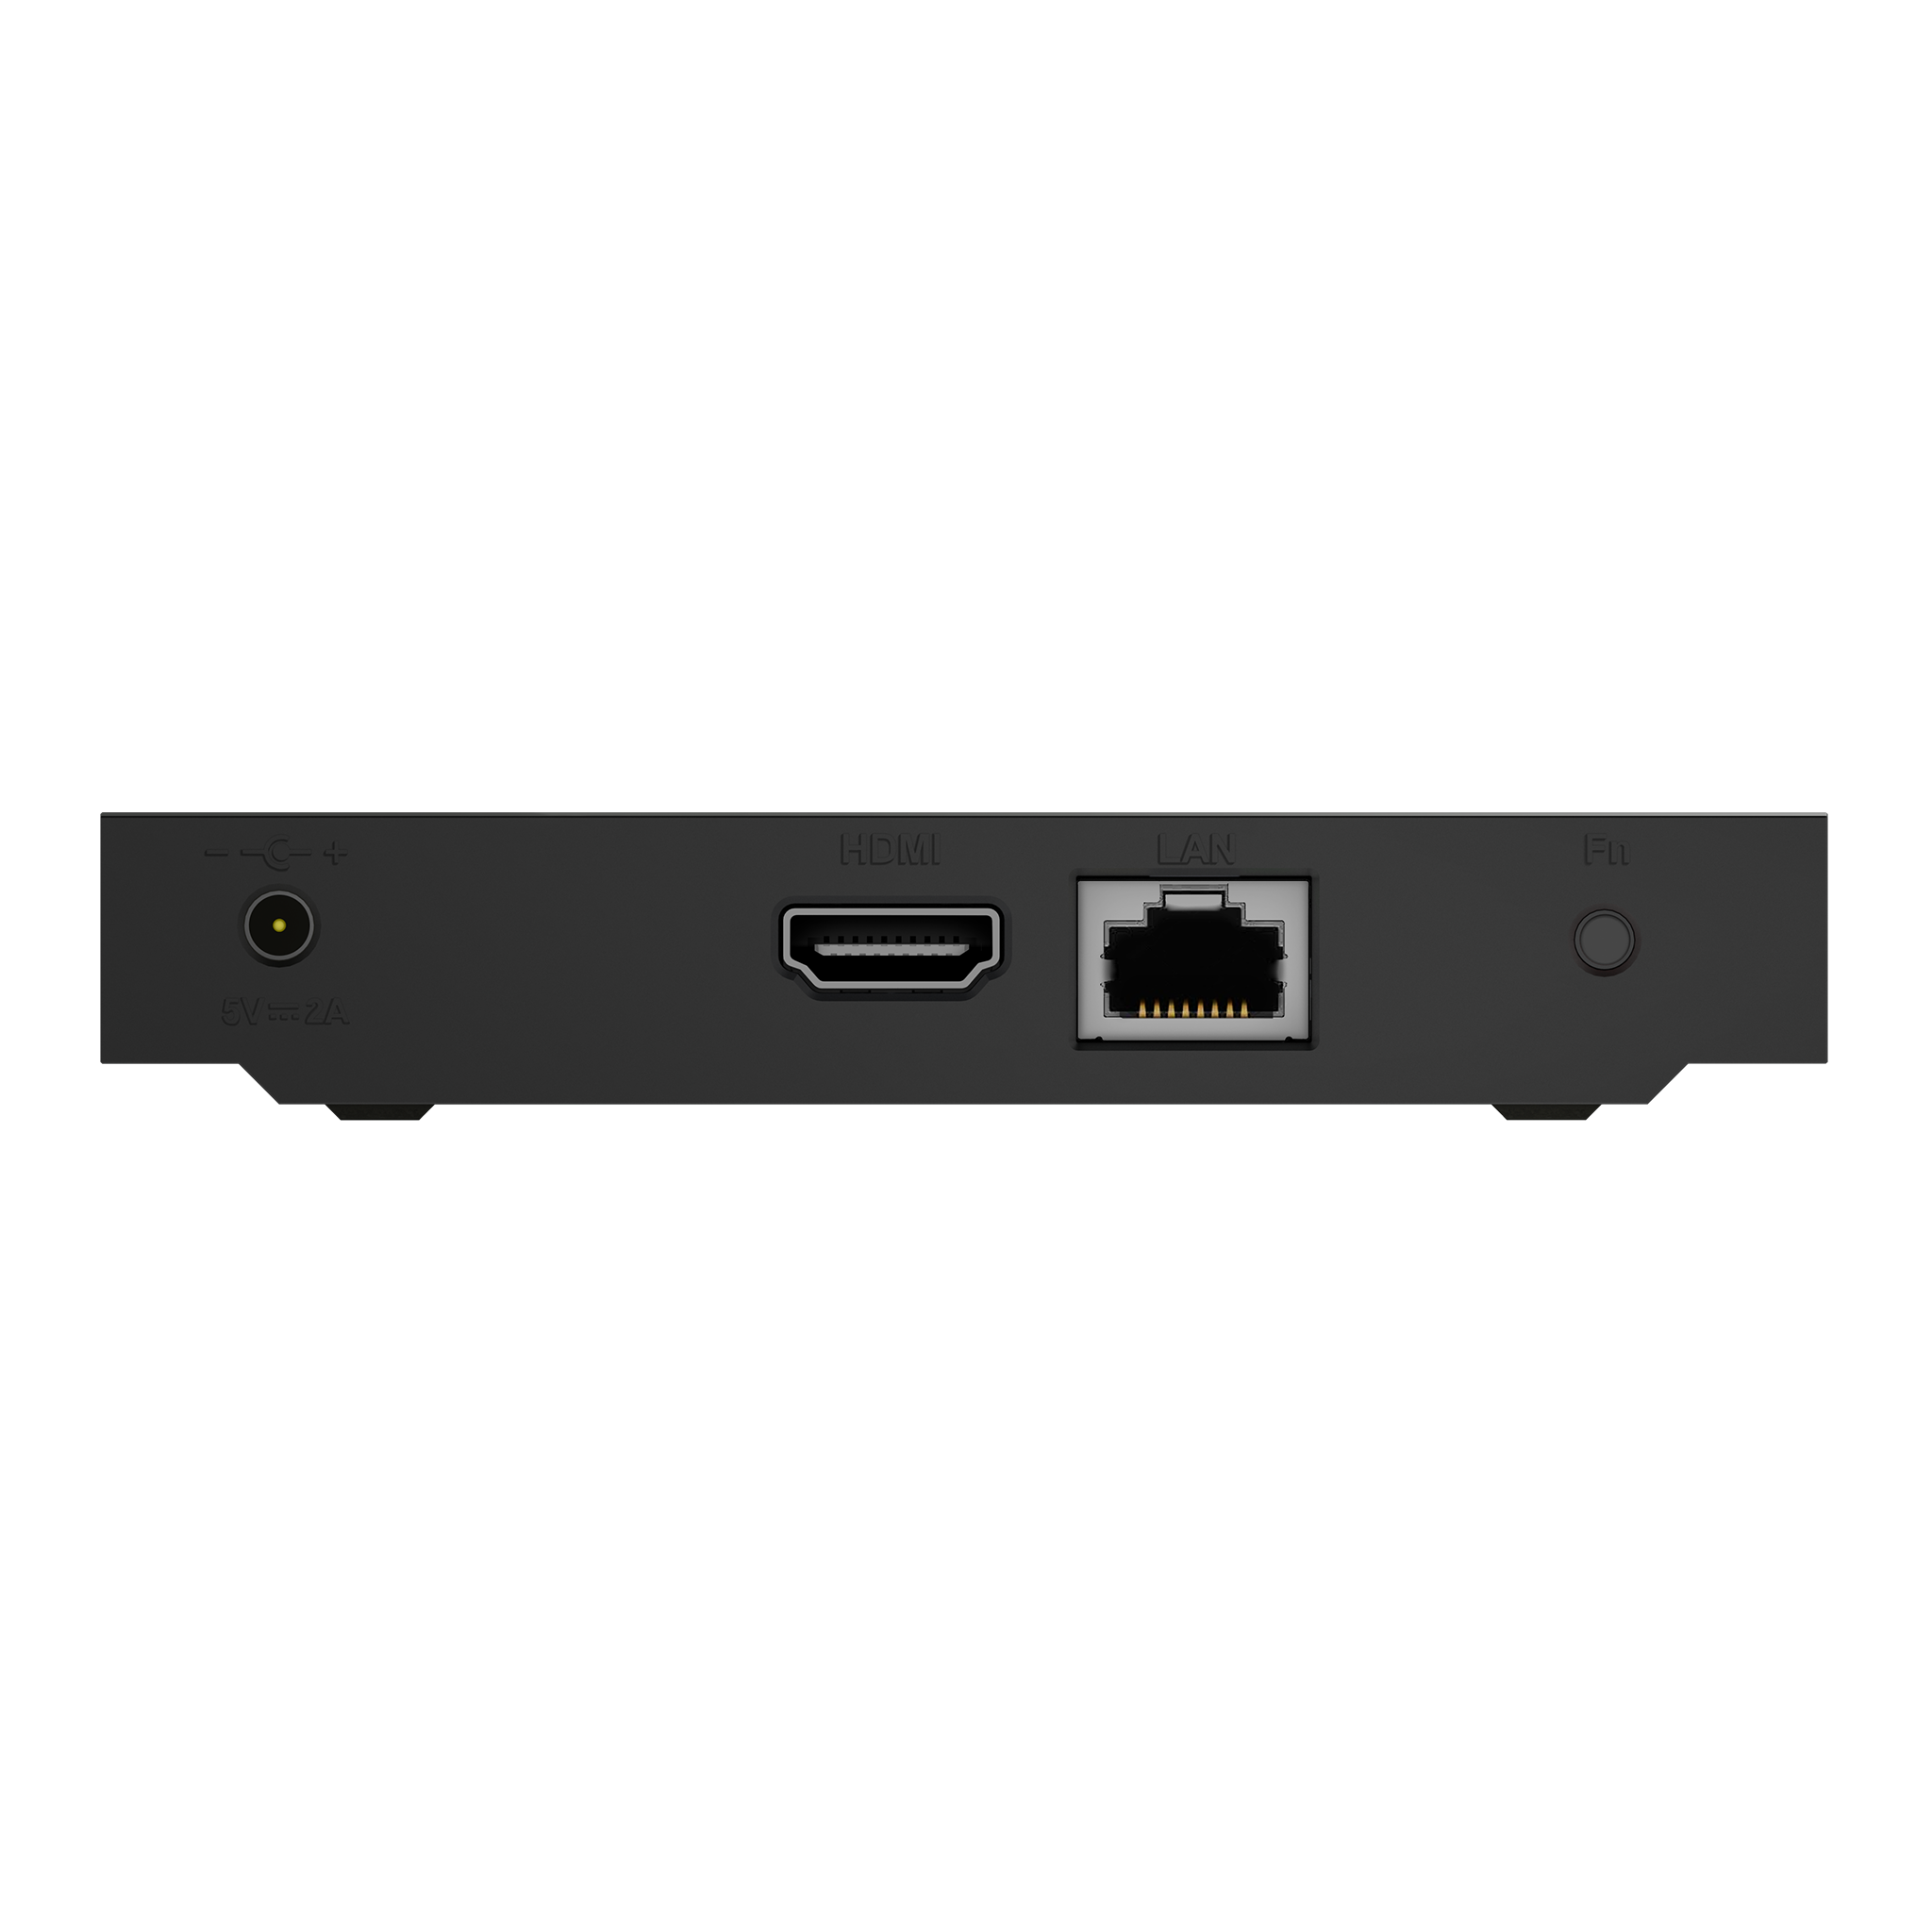 MAG 520 IP TV Internet Streamer HEVC H.265 4K UHD 60FPS Linux USB 3.0 LAN HDMI